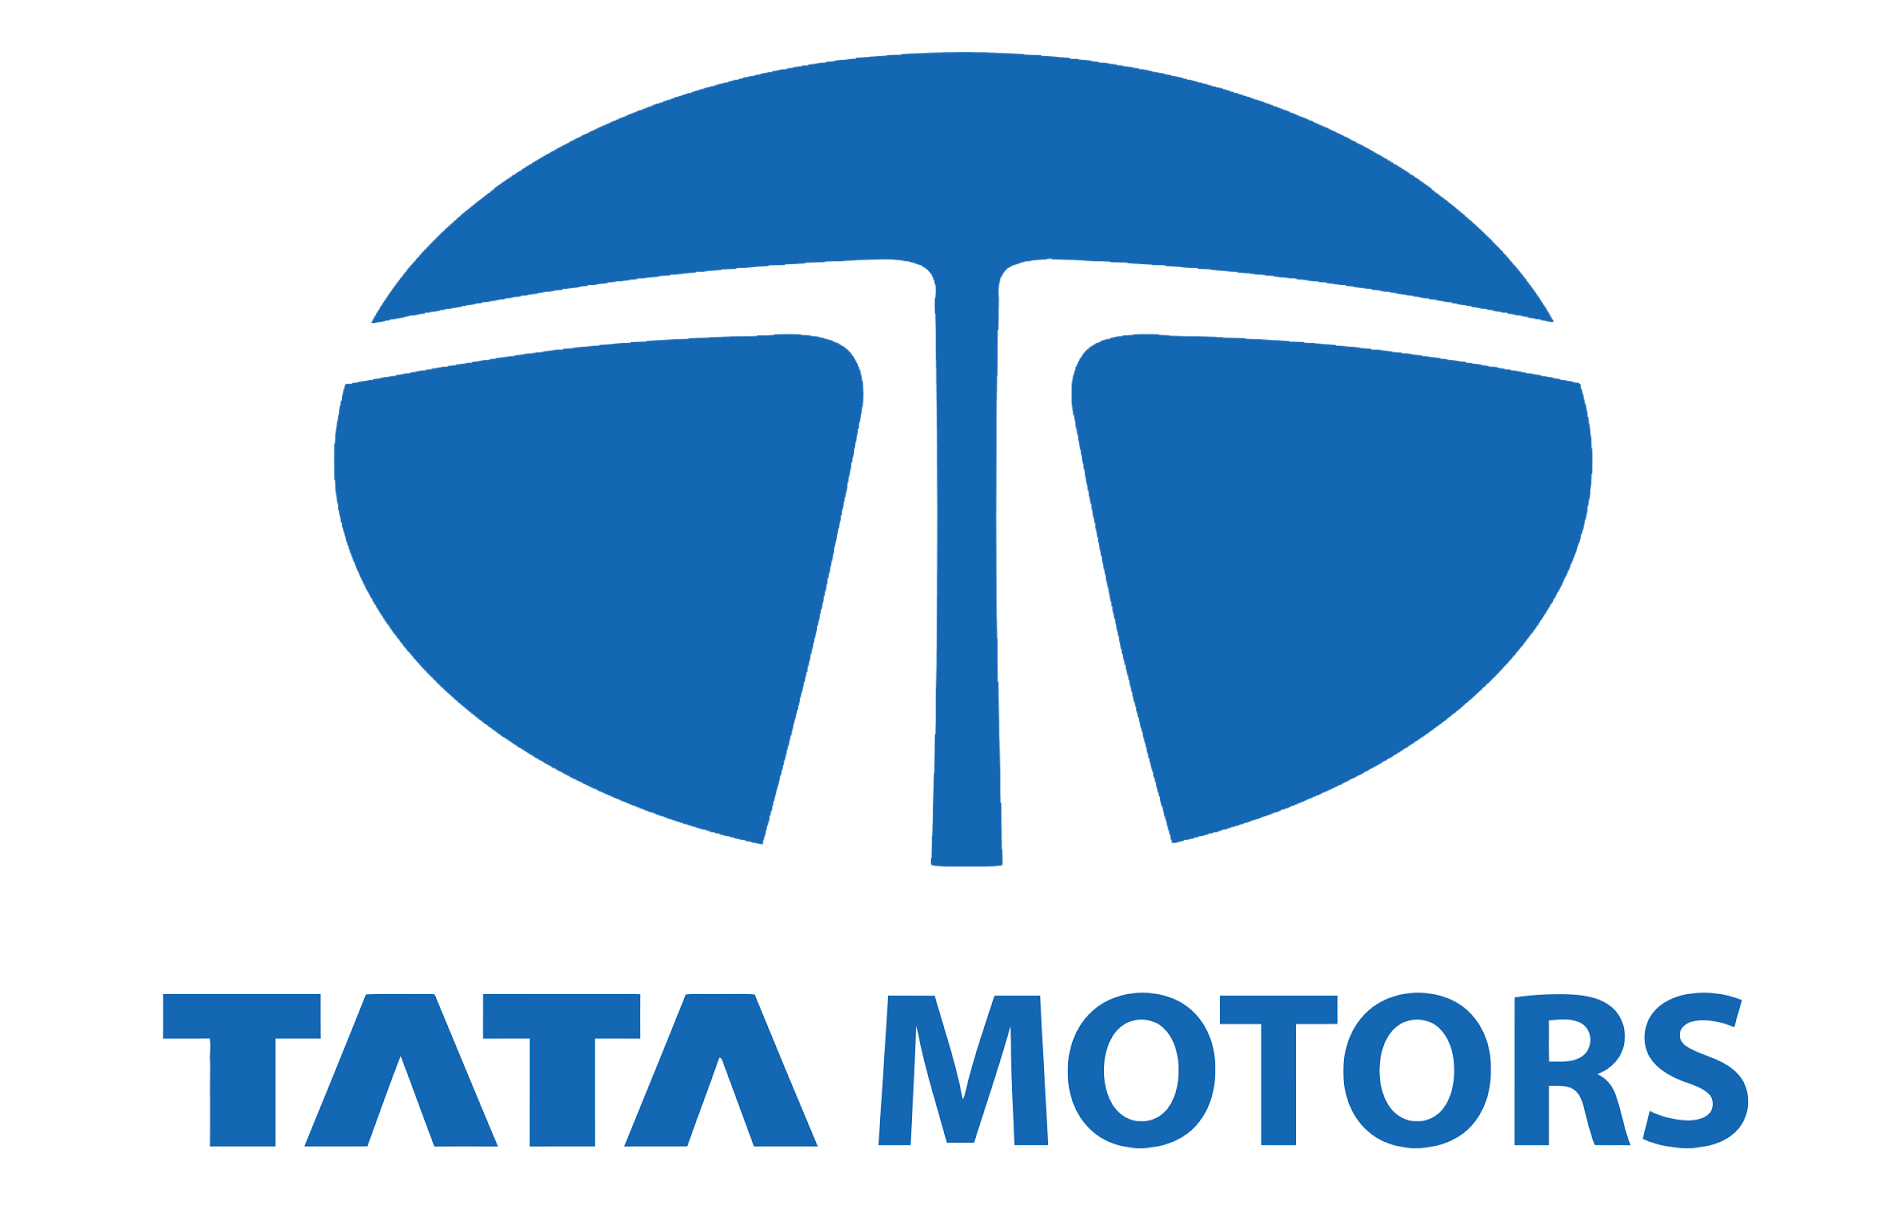 Tata Motors Cars Showroom - Marudhara Motors|Show Room|Automotive